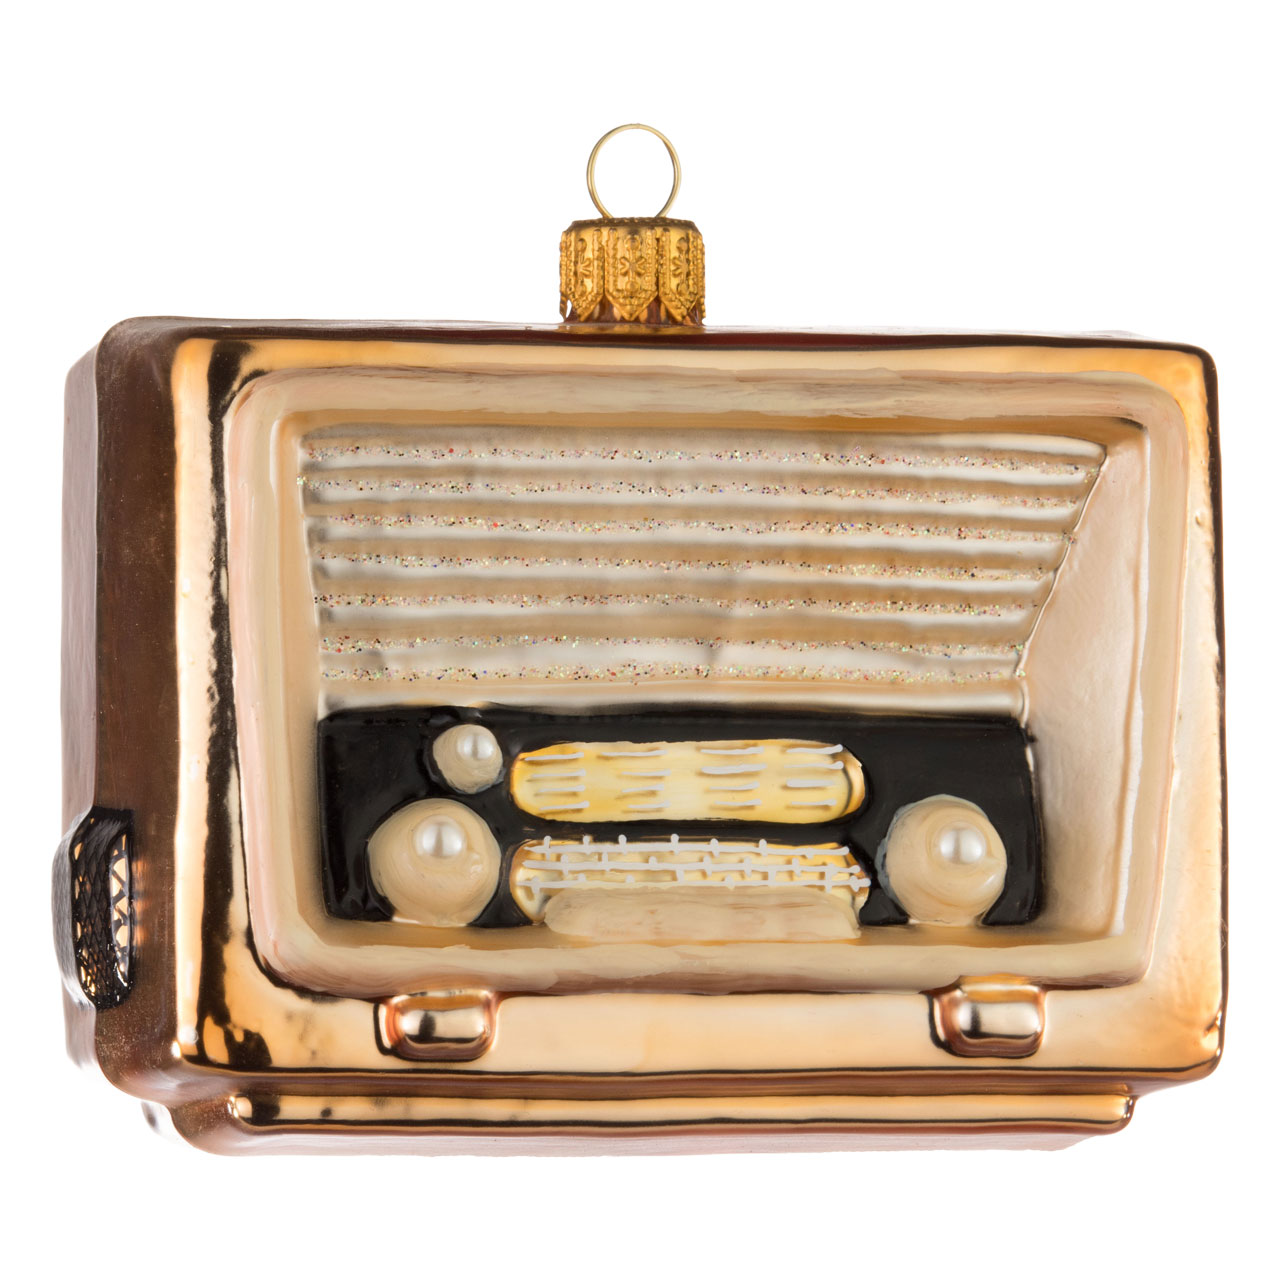 Nostalgic radio